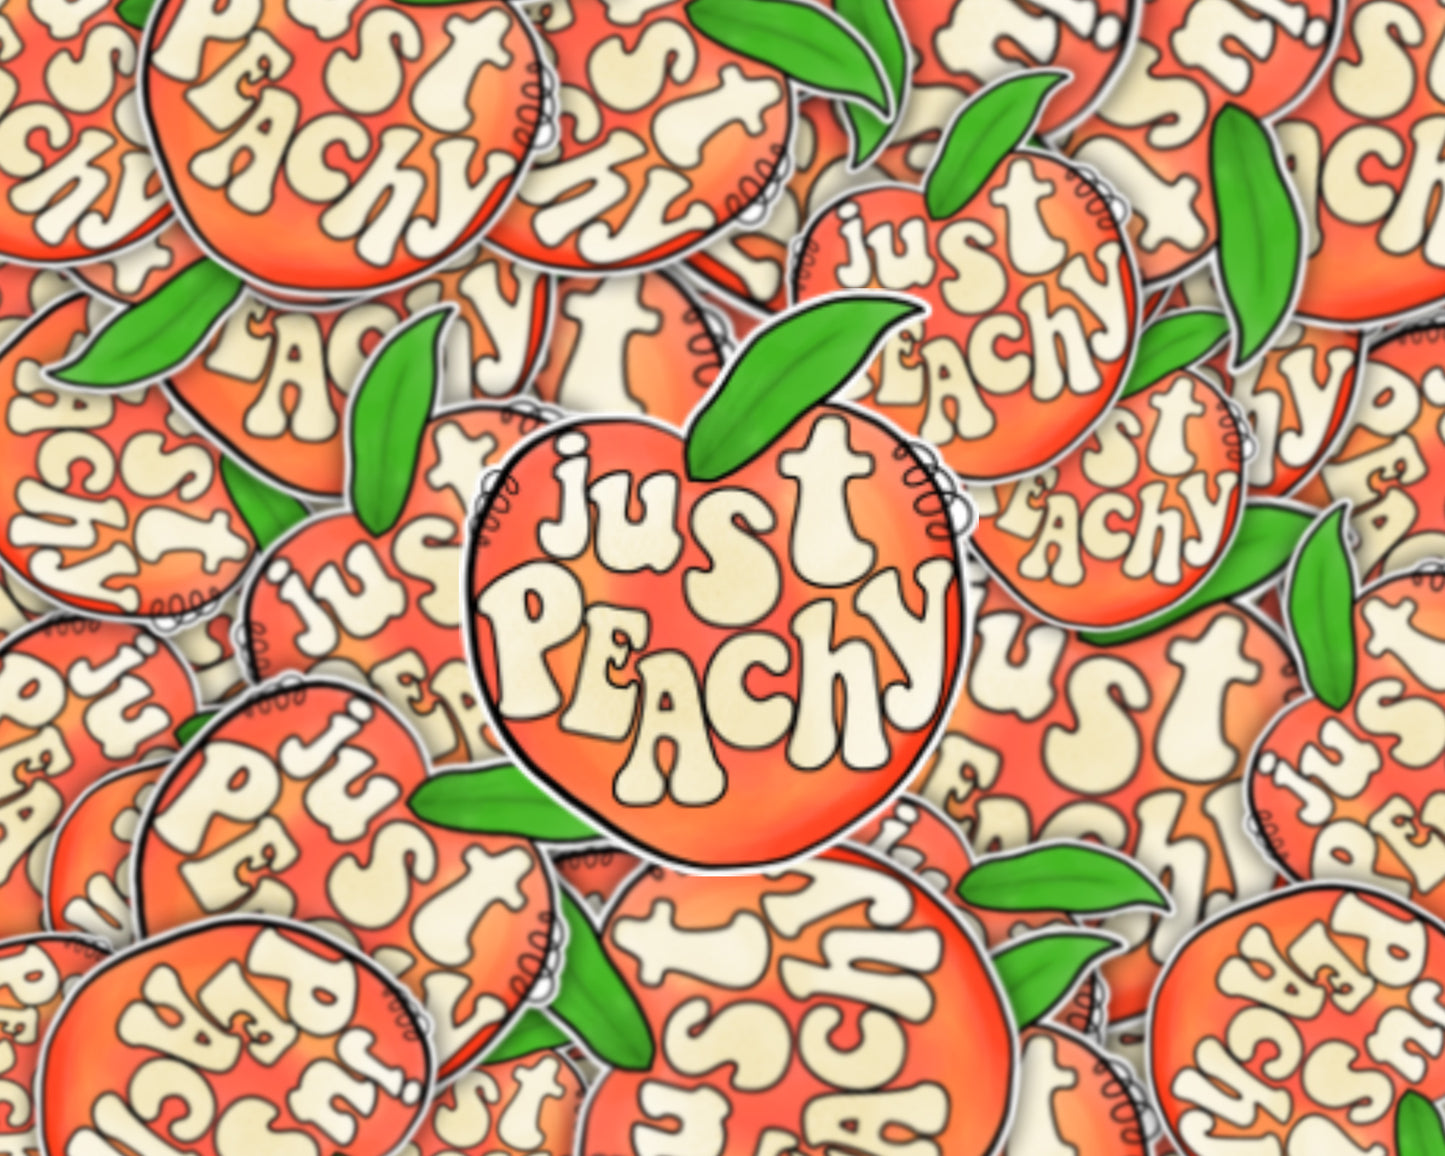 Just Peachy Waterproof Sticker (SS810)